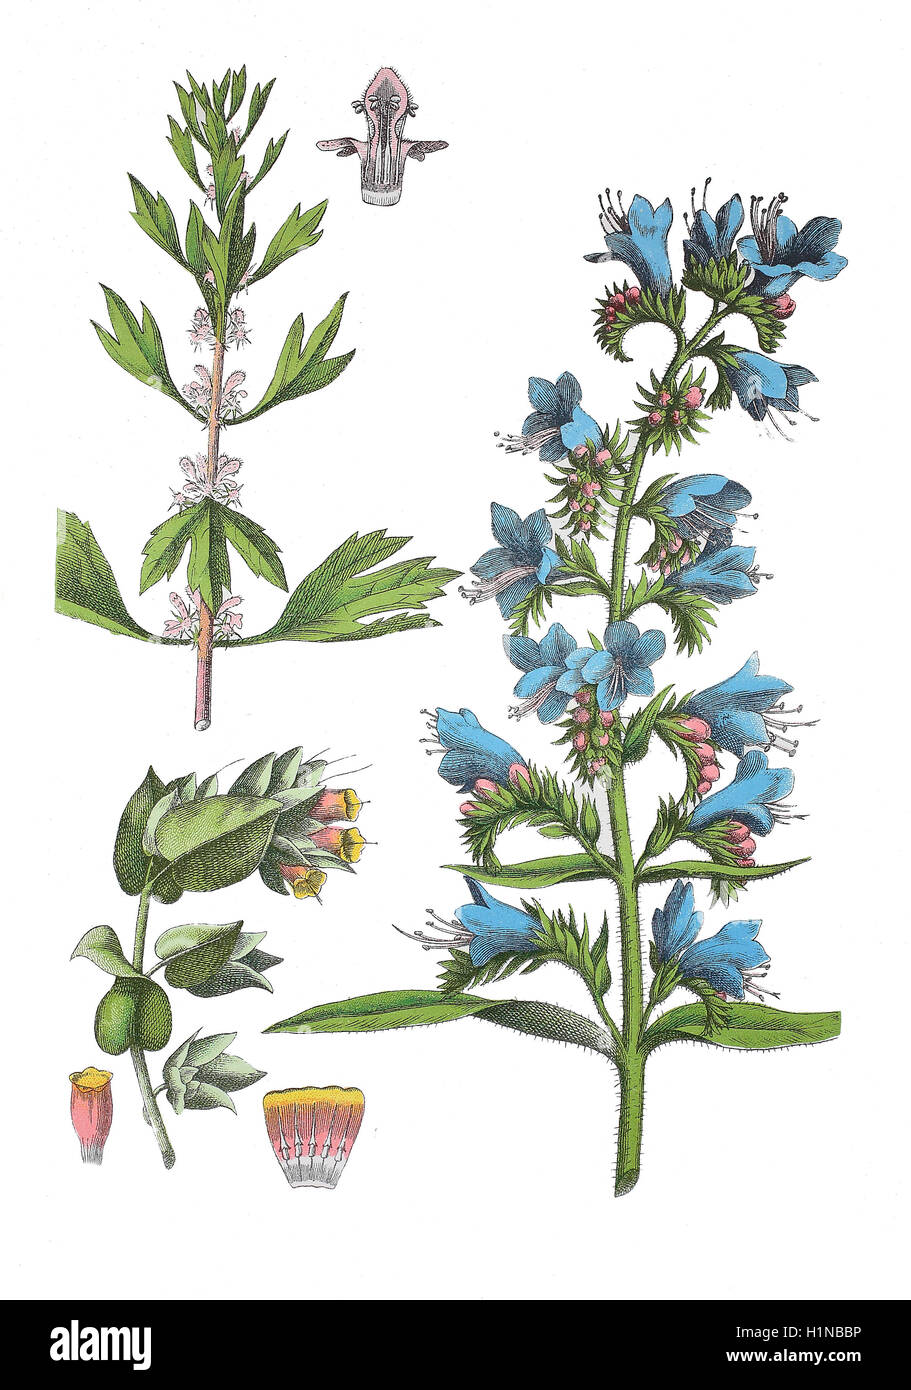 motherwort, Leonurus cardiaca (top left), Cerinthe, Cerinthe major (bottem left), viper's bugloss and blueweed, Echium vulgare (right) Stock Photo